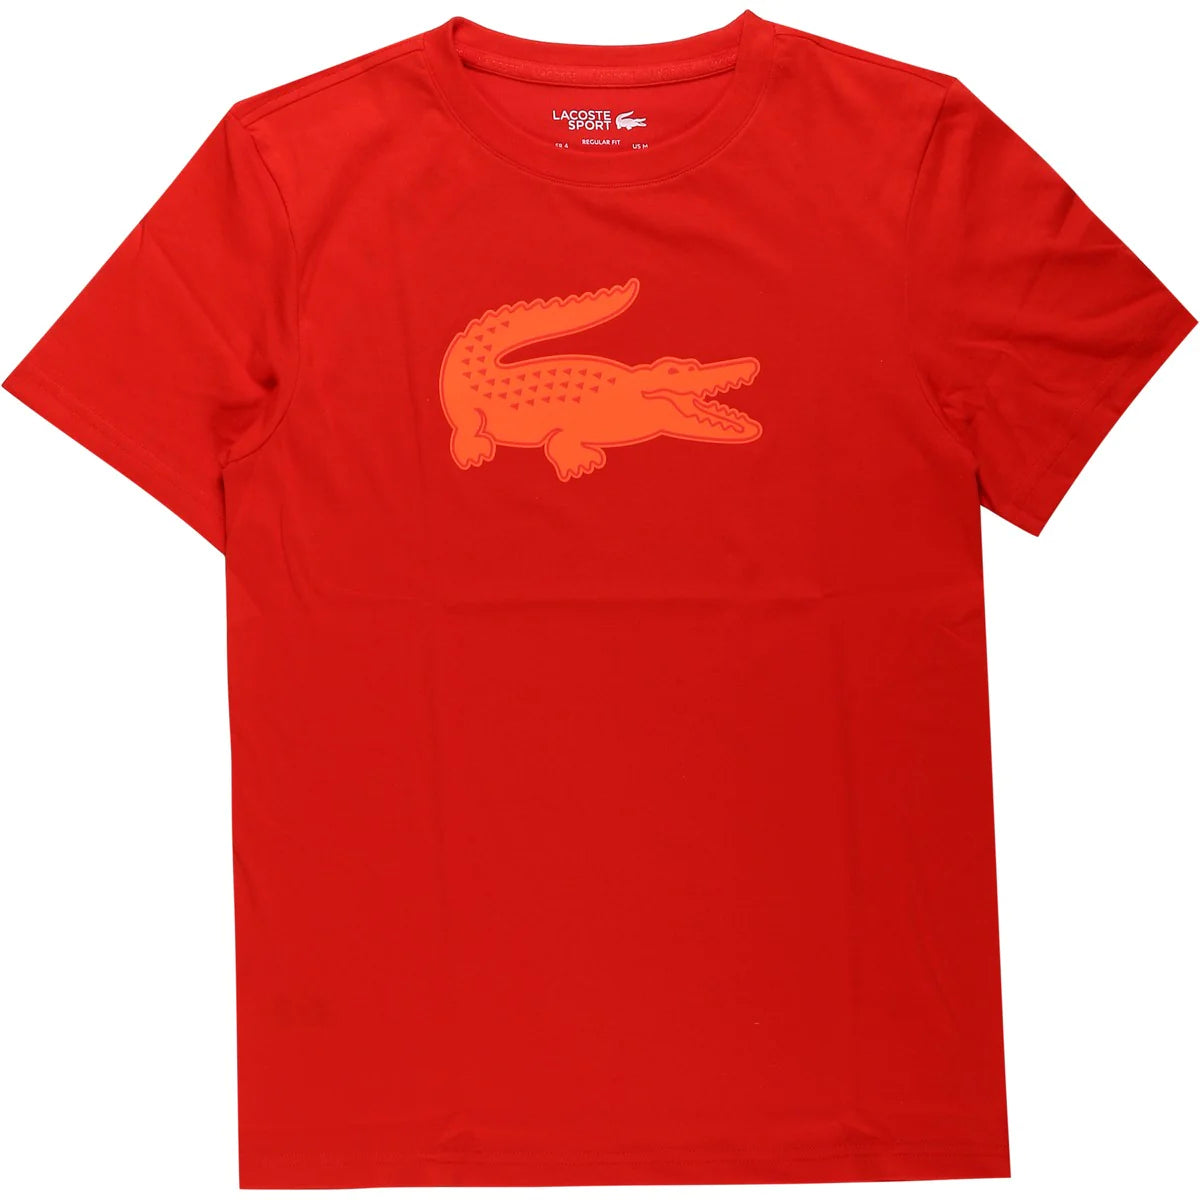 Lacoste - SPORT 3D Print Crocodile Breathable Jersey T-Shirt - Red/Orange